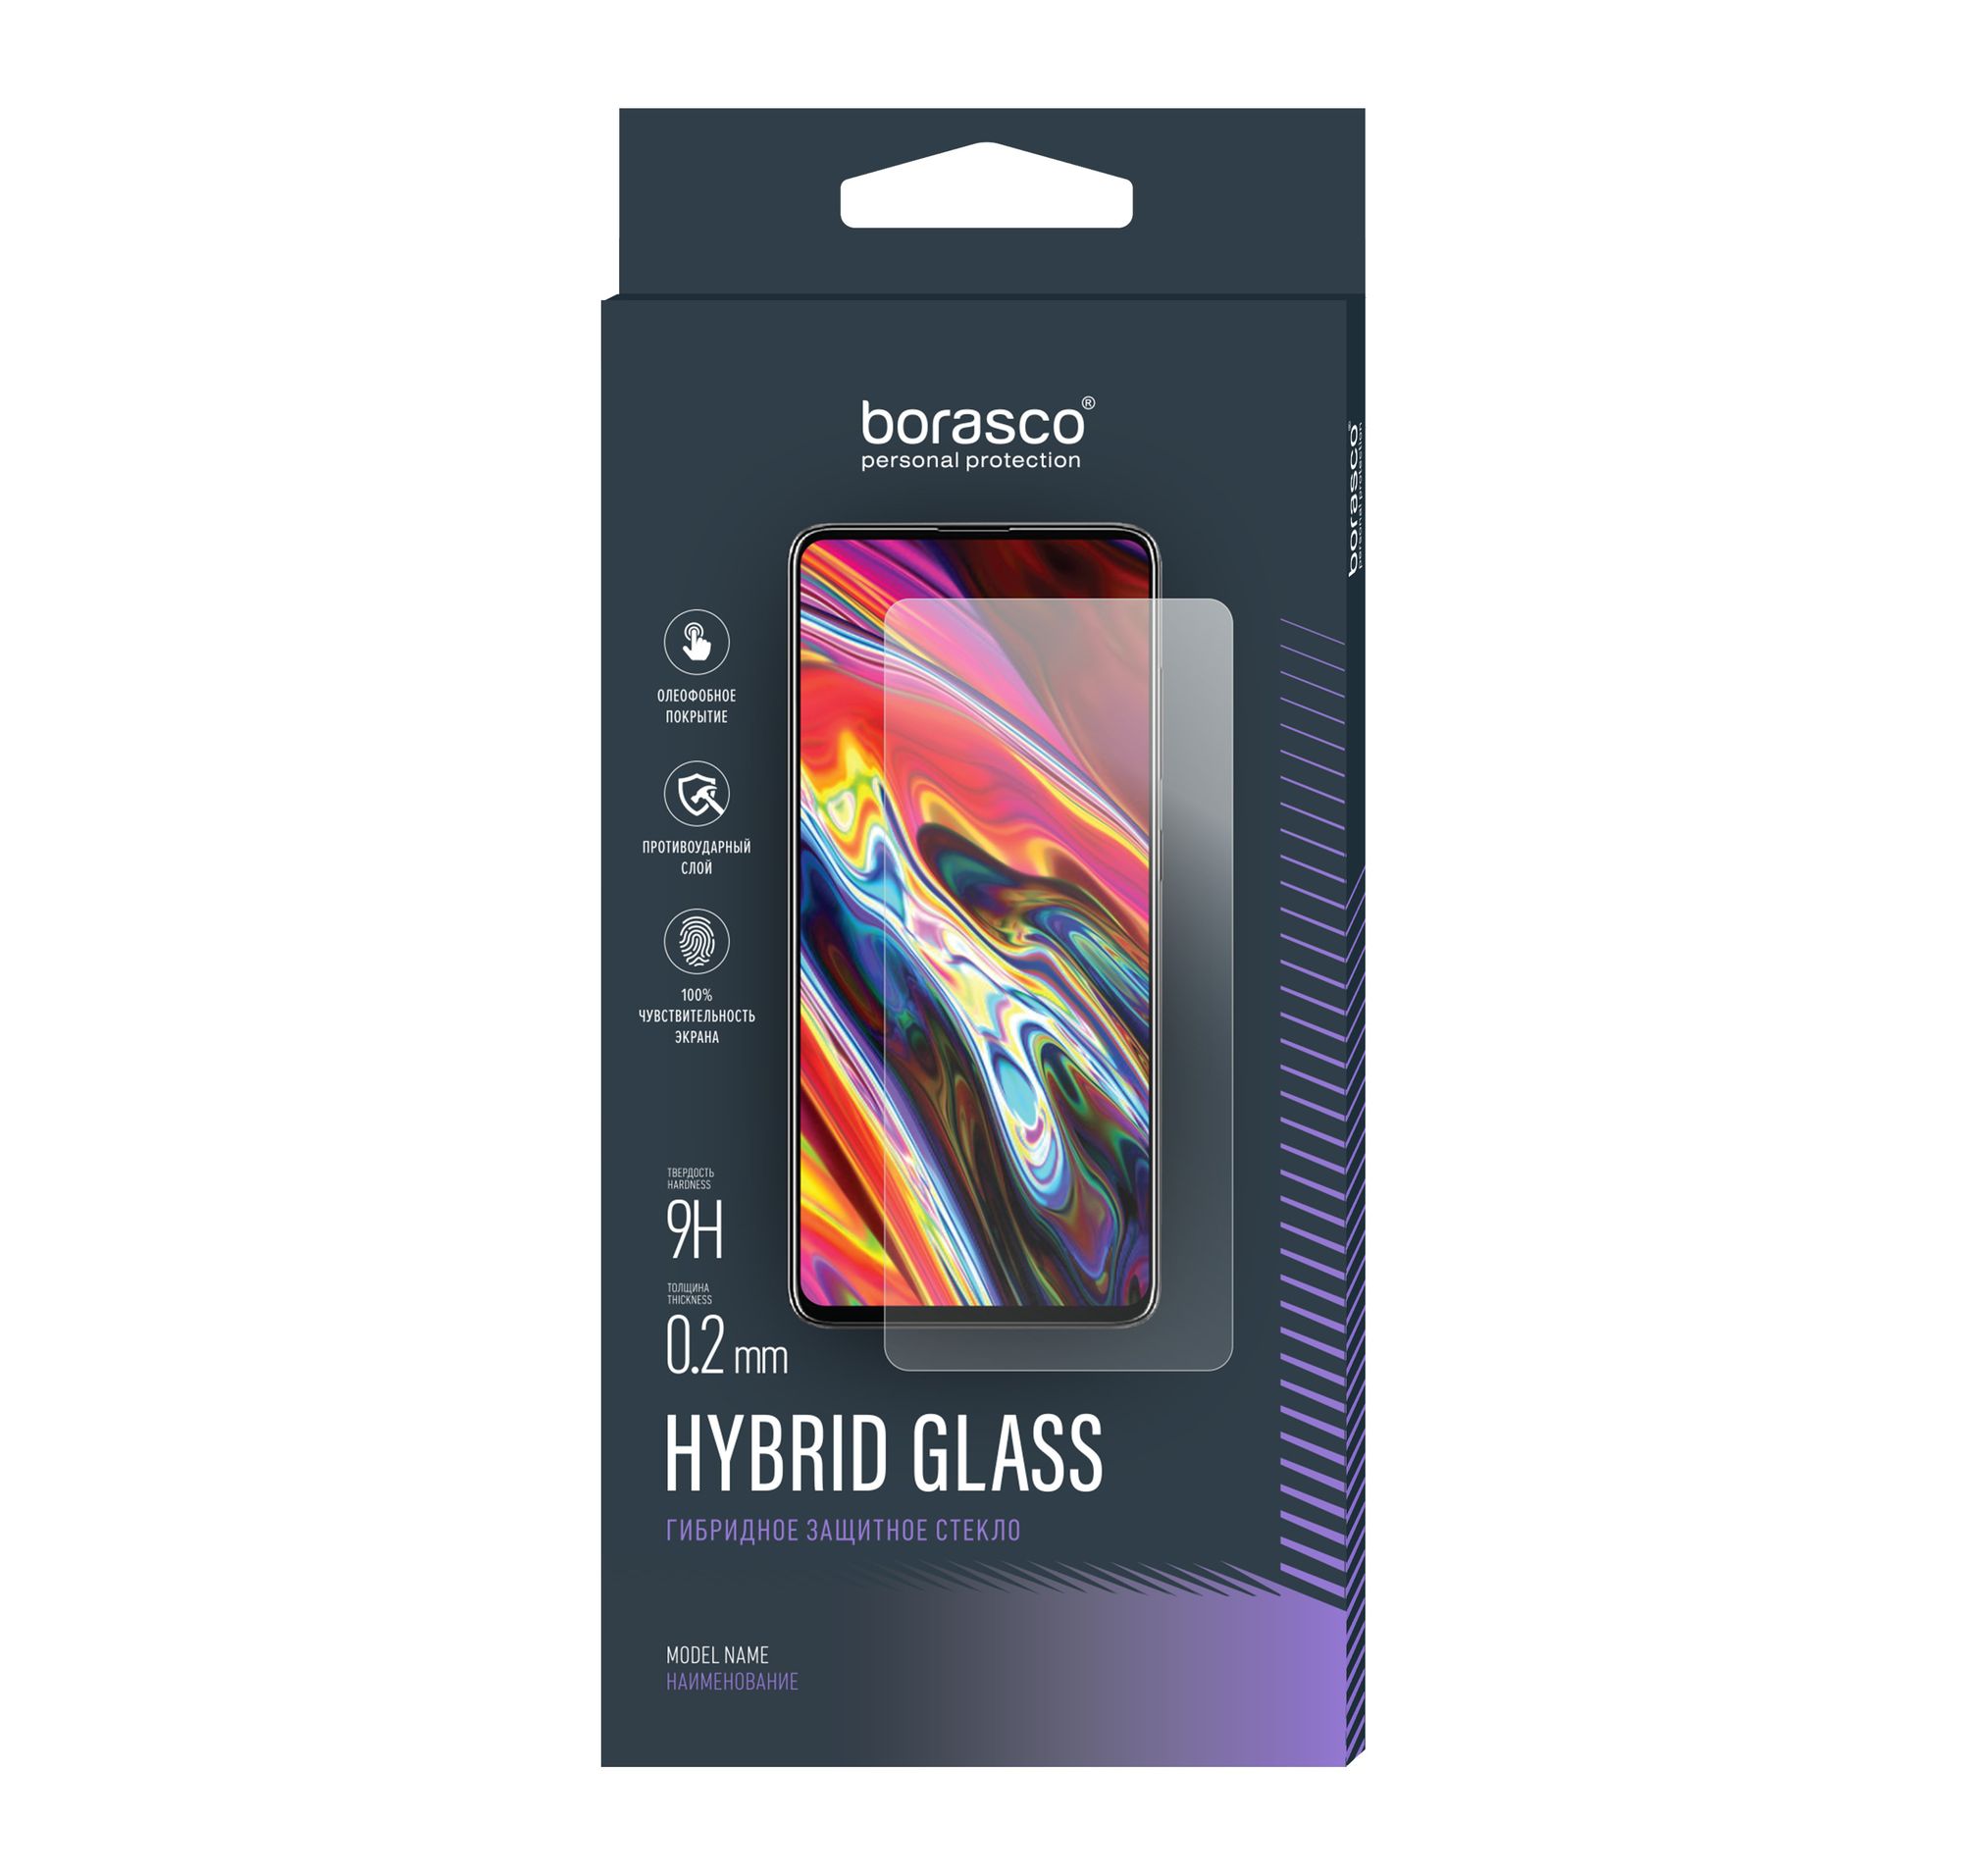 Стекло защитное Hybrid Glass VSP 0,26 мм для Sony Xperia XZ Premium Dual стекло модуля для sony h3113 xperia xa2 h4113 xperia xa2 dual черный aaa